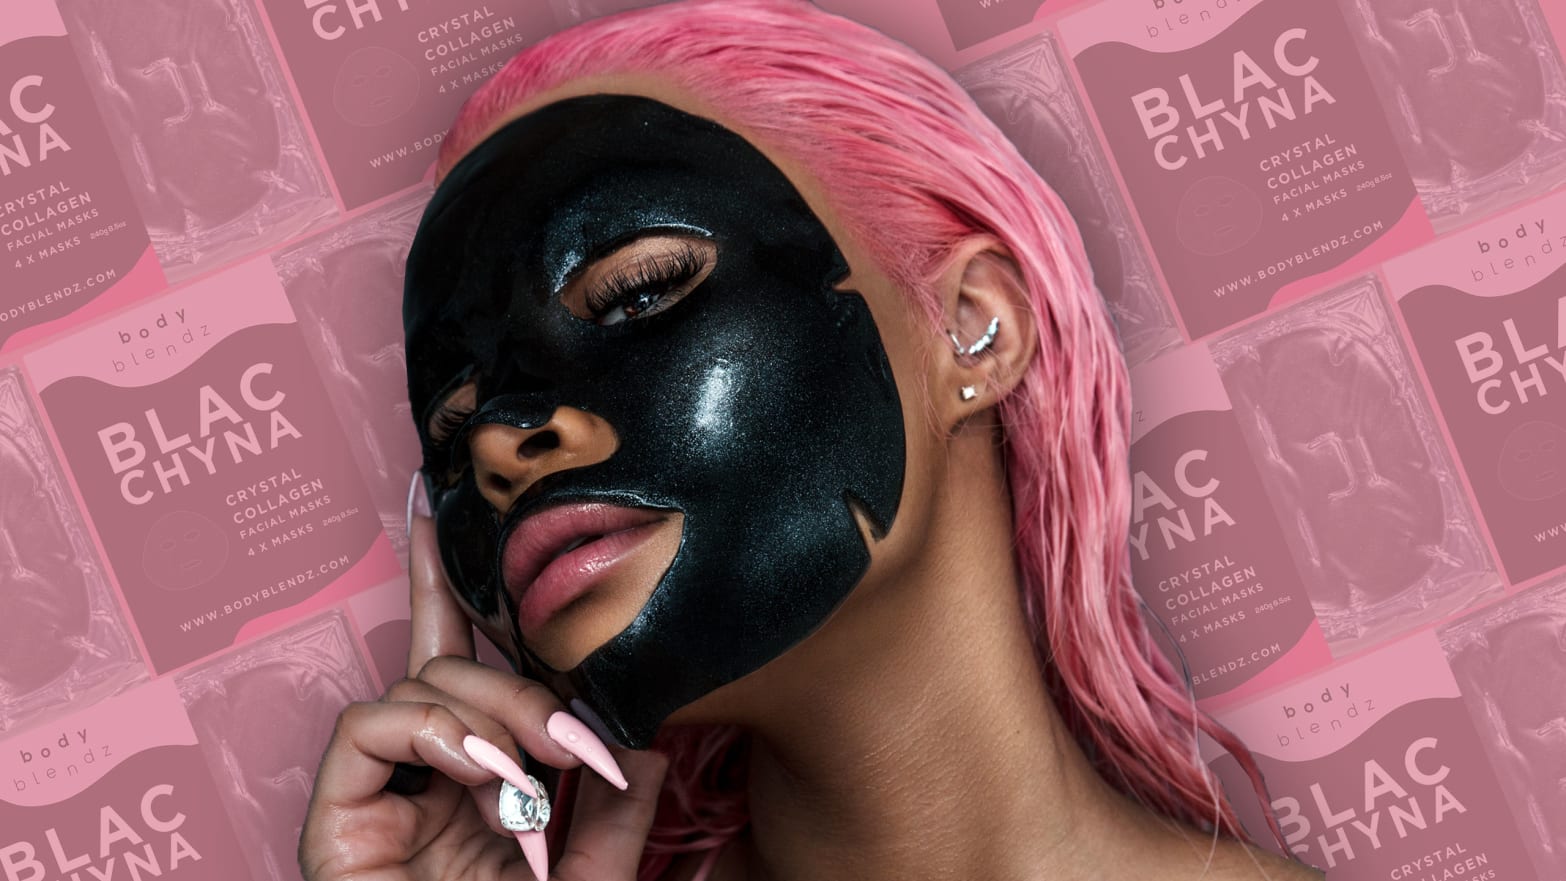 blac chyna X Blendz Crystal Collagen Facial Mask instagram pink ad sponsored spon con does it work dermatology epidermis dermis debunker pseudoscience